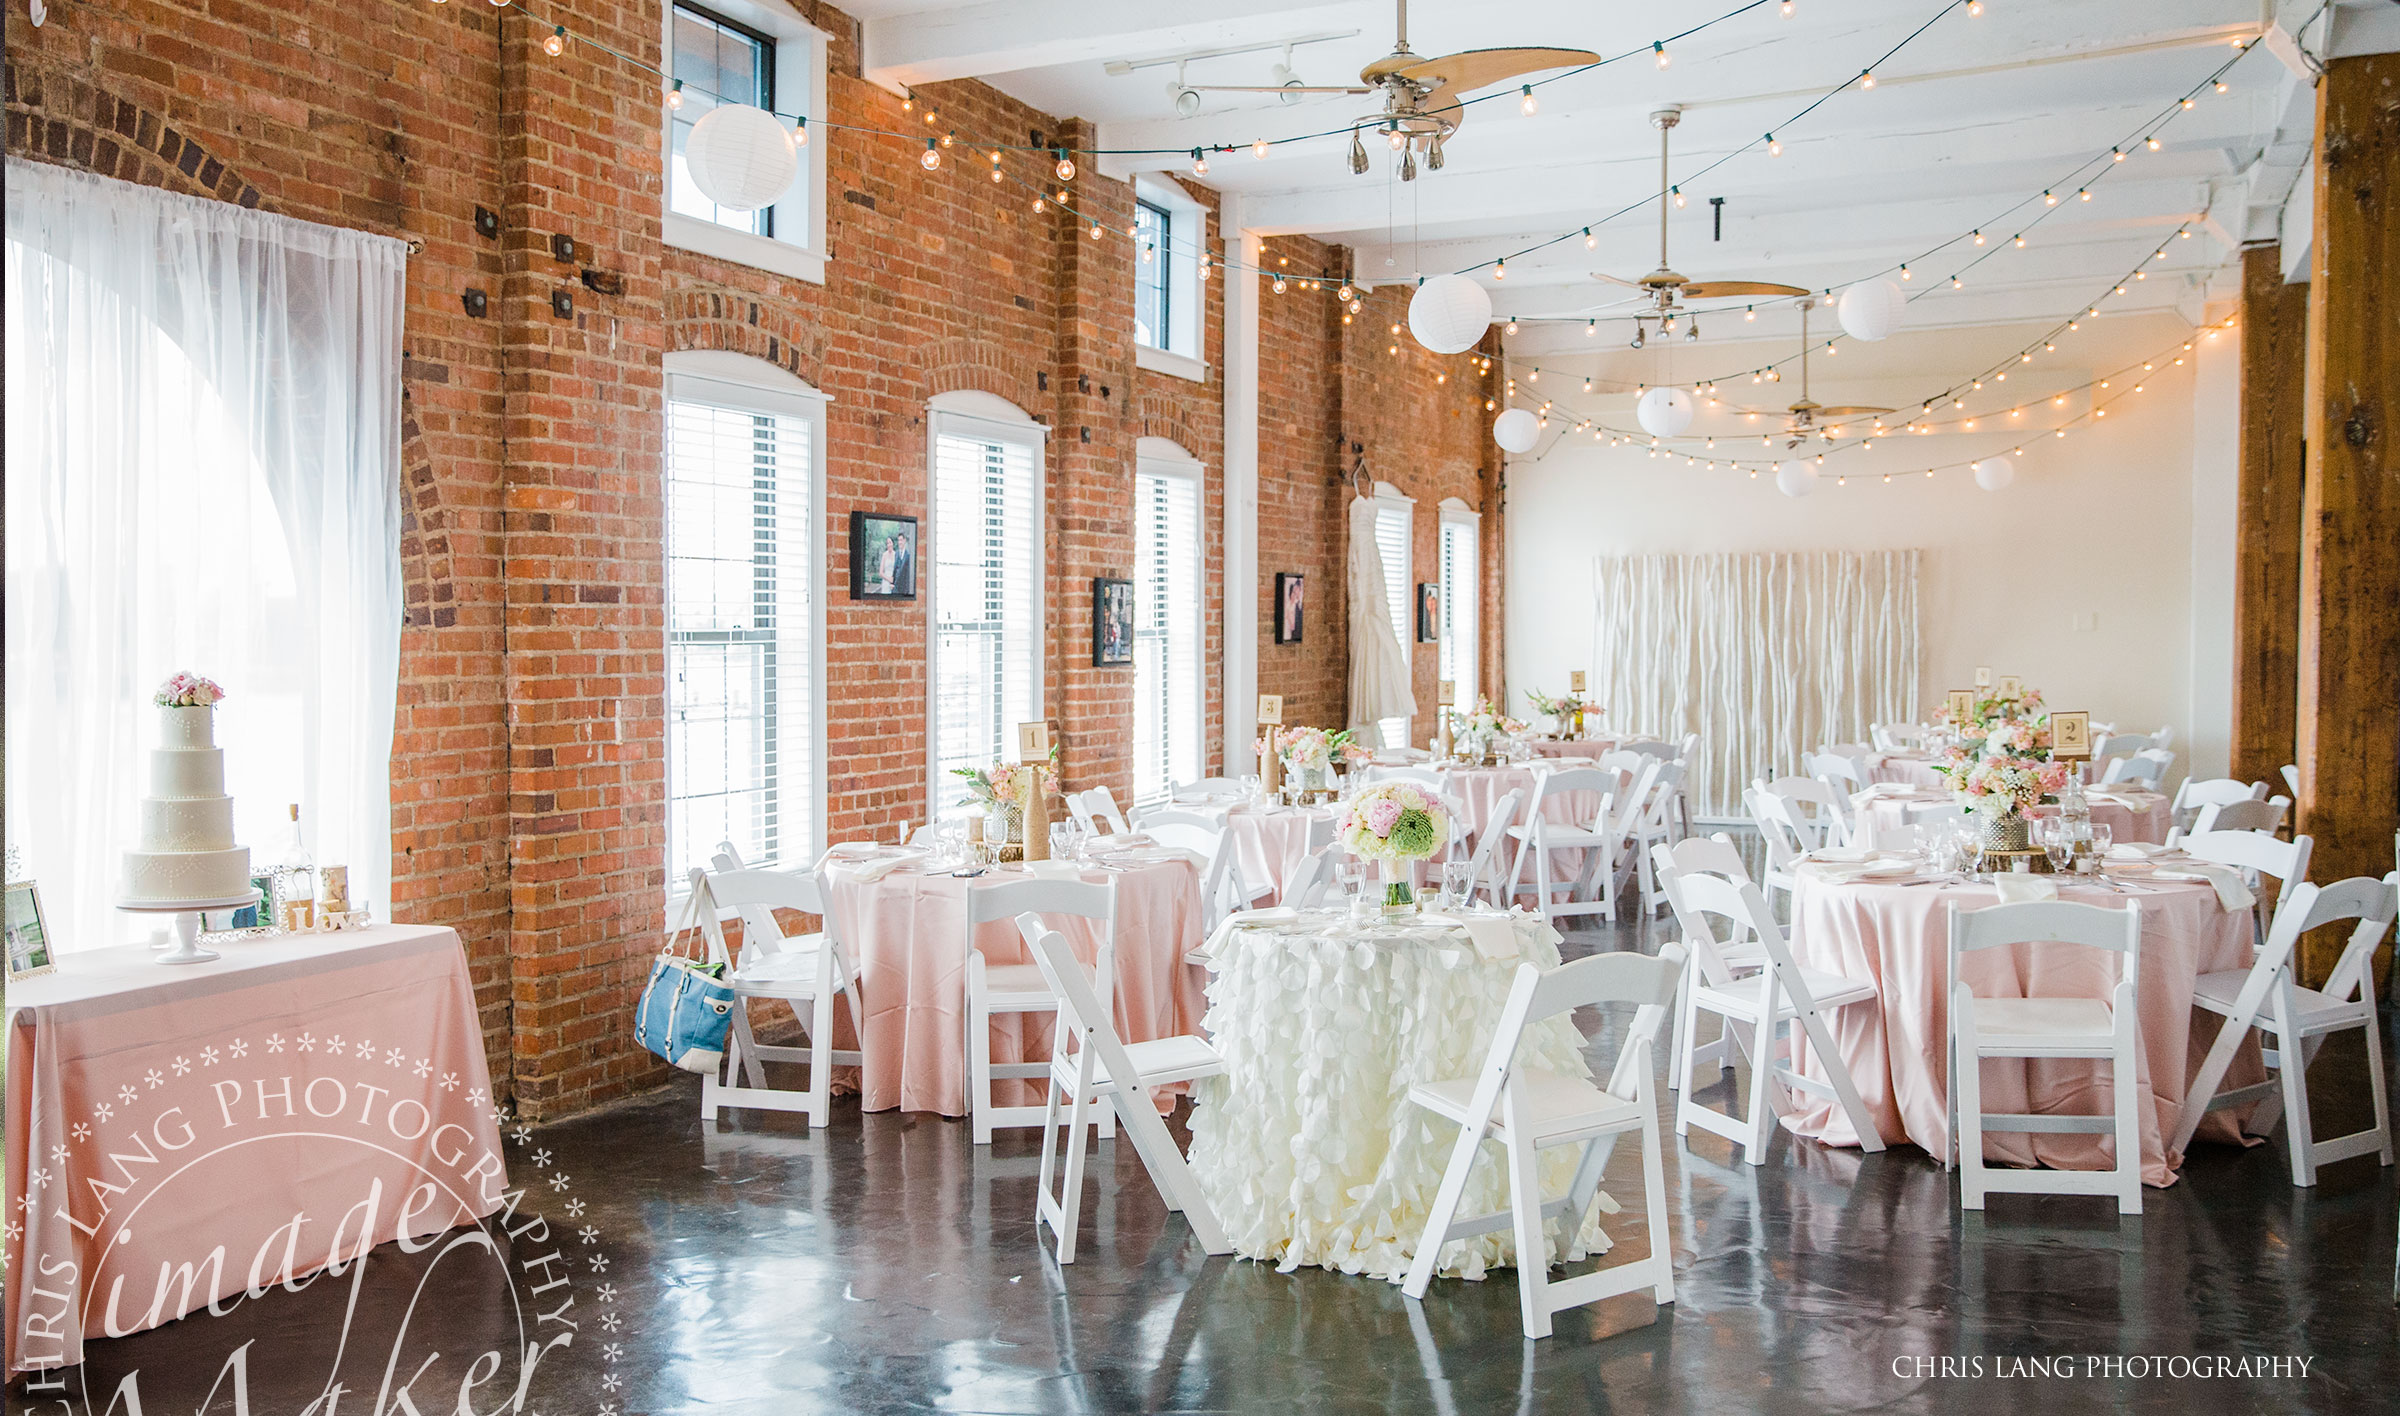 River Room - Wilmington NC - wedding & receptions - Image of the inside  - wedding reception decorations - Wilmington wedding venues